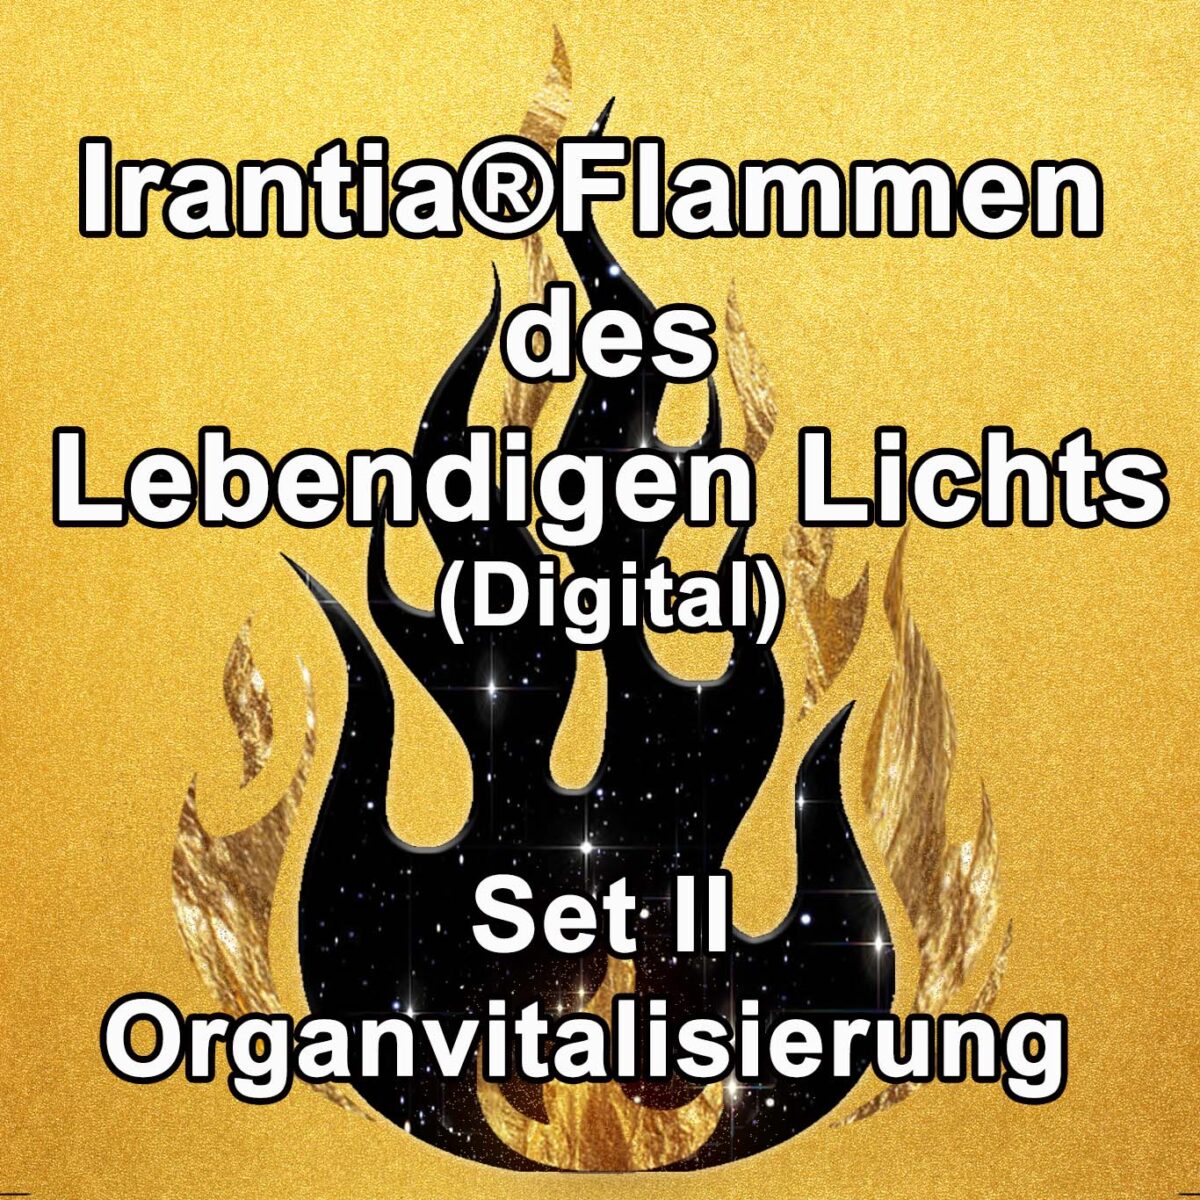 Irantia®Flammen des Lebendigen Lichts (digital) – Set 2 (Organvitalisierung)